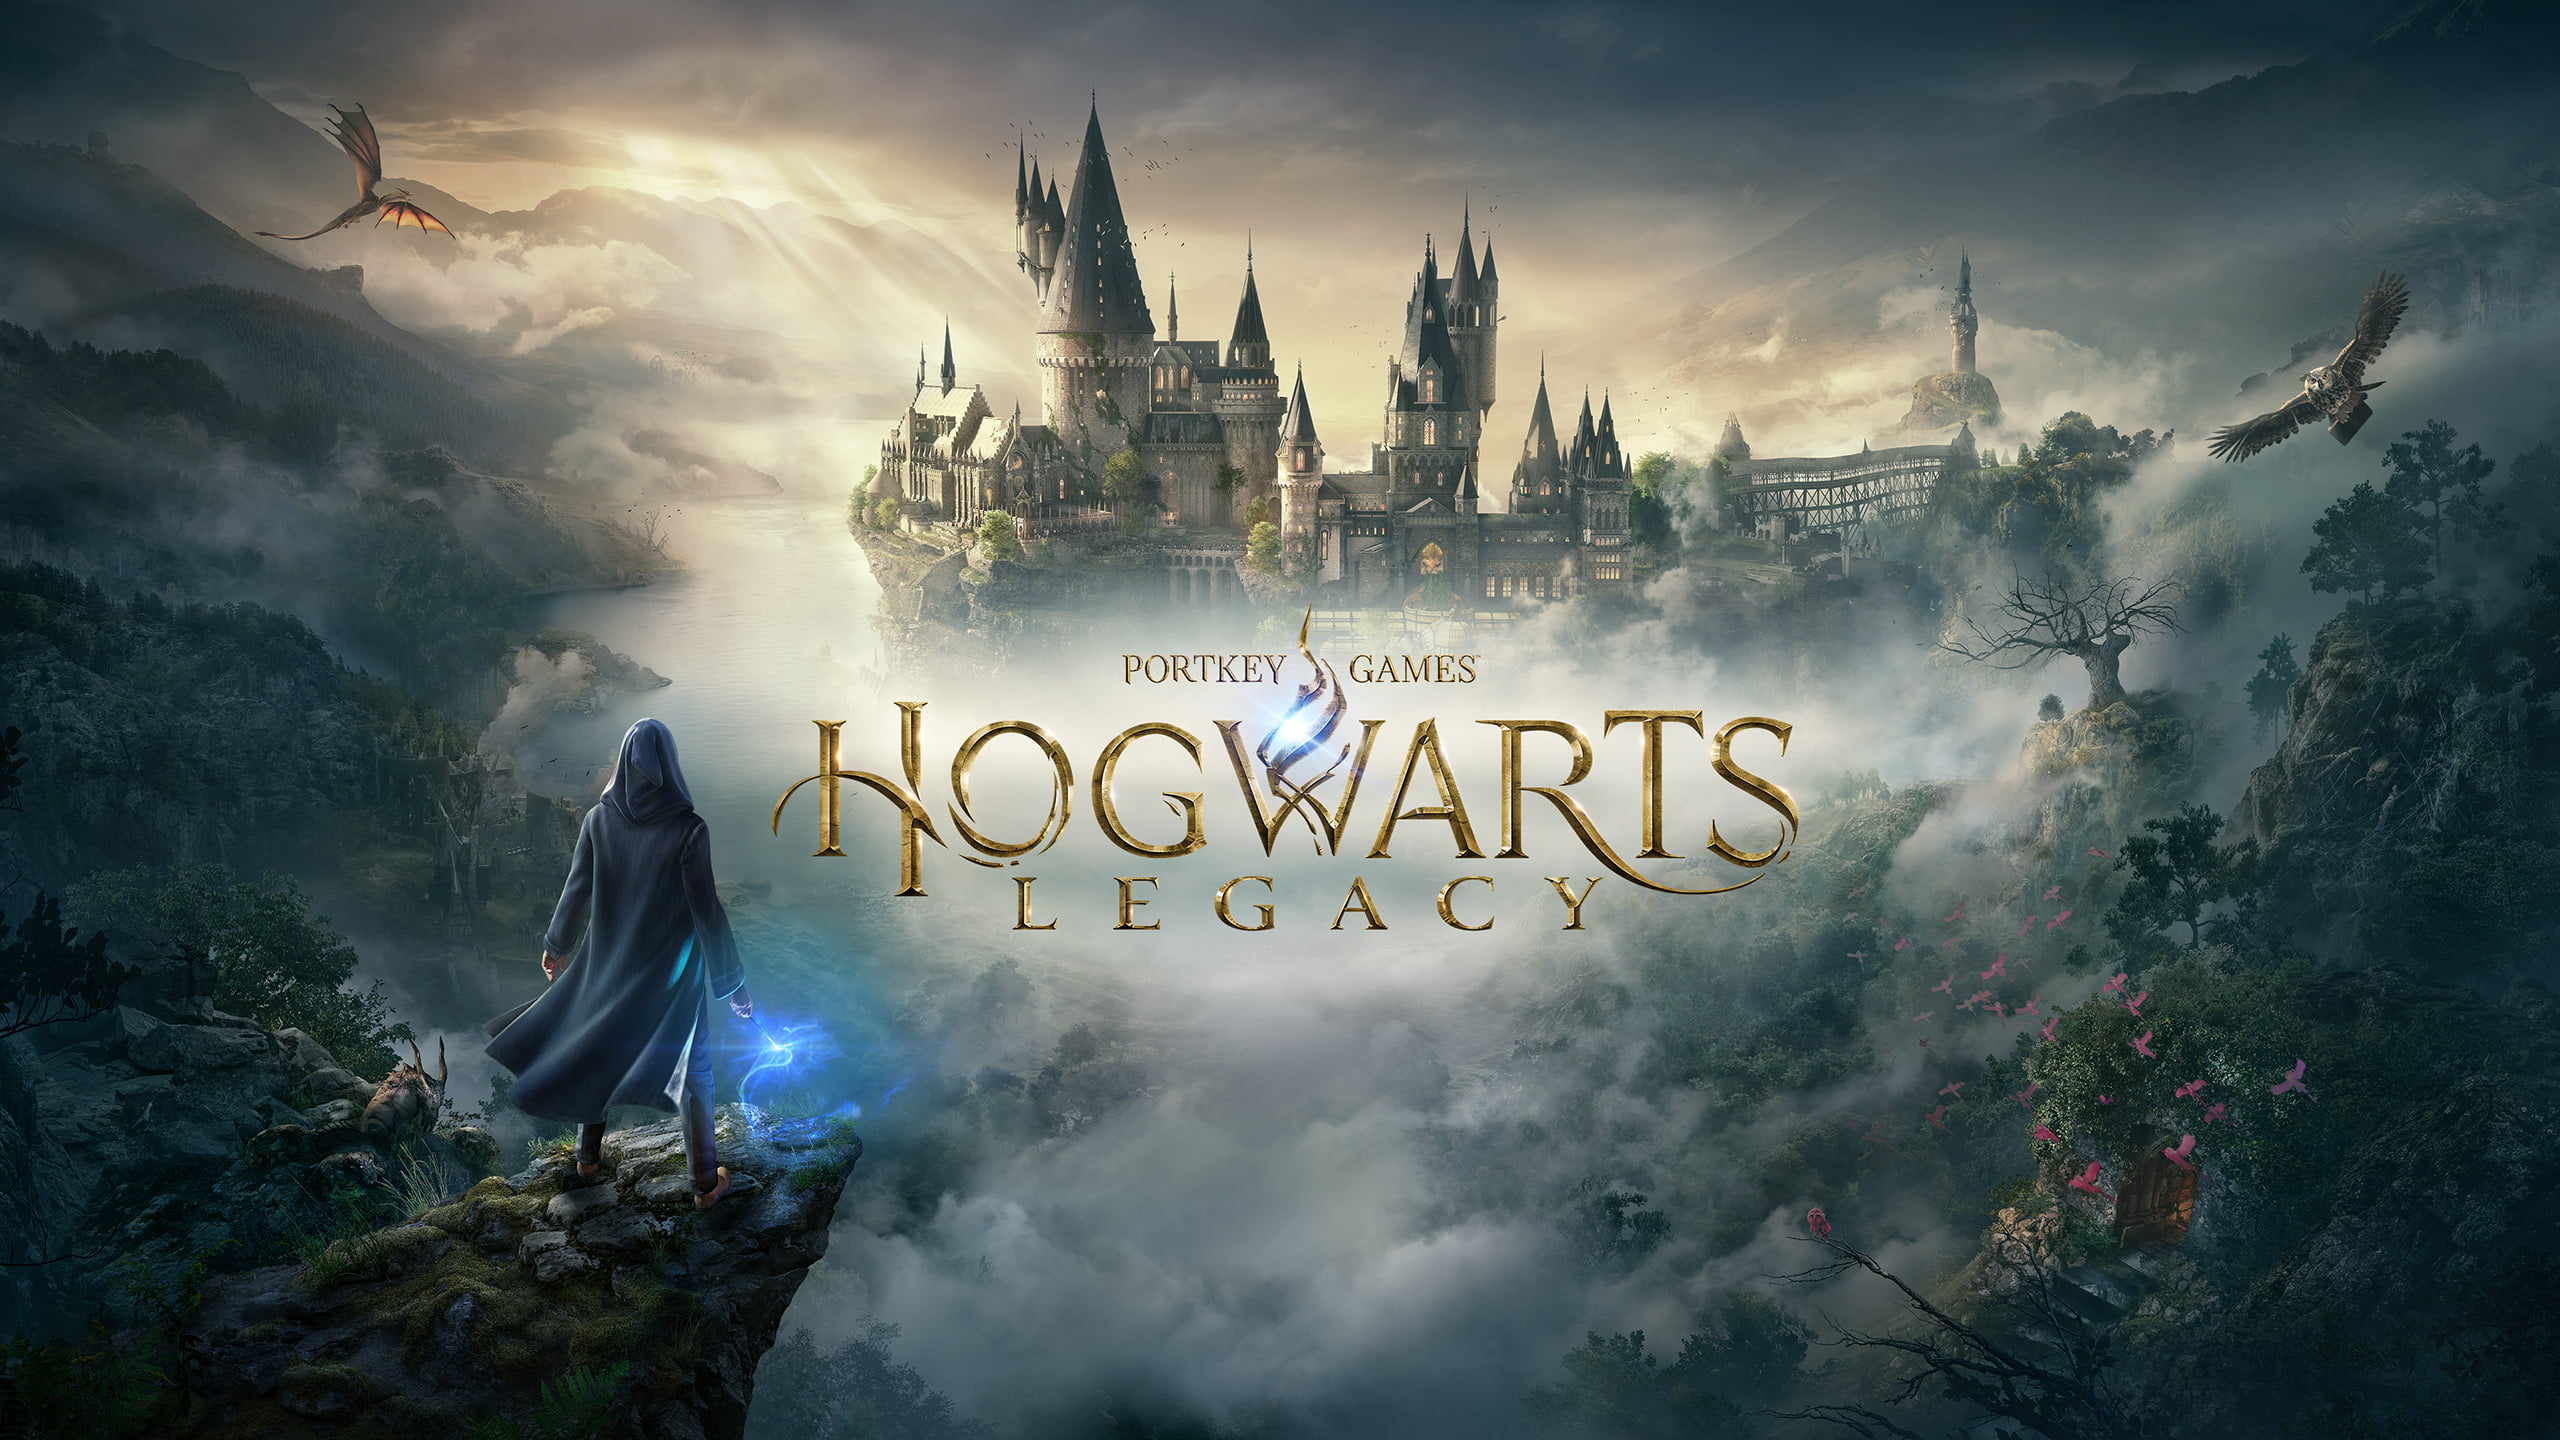 Game Hogwarts Legacy